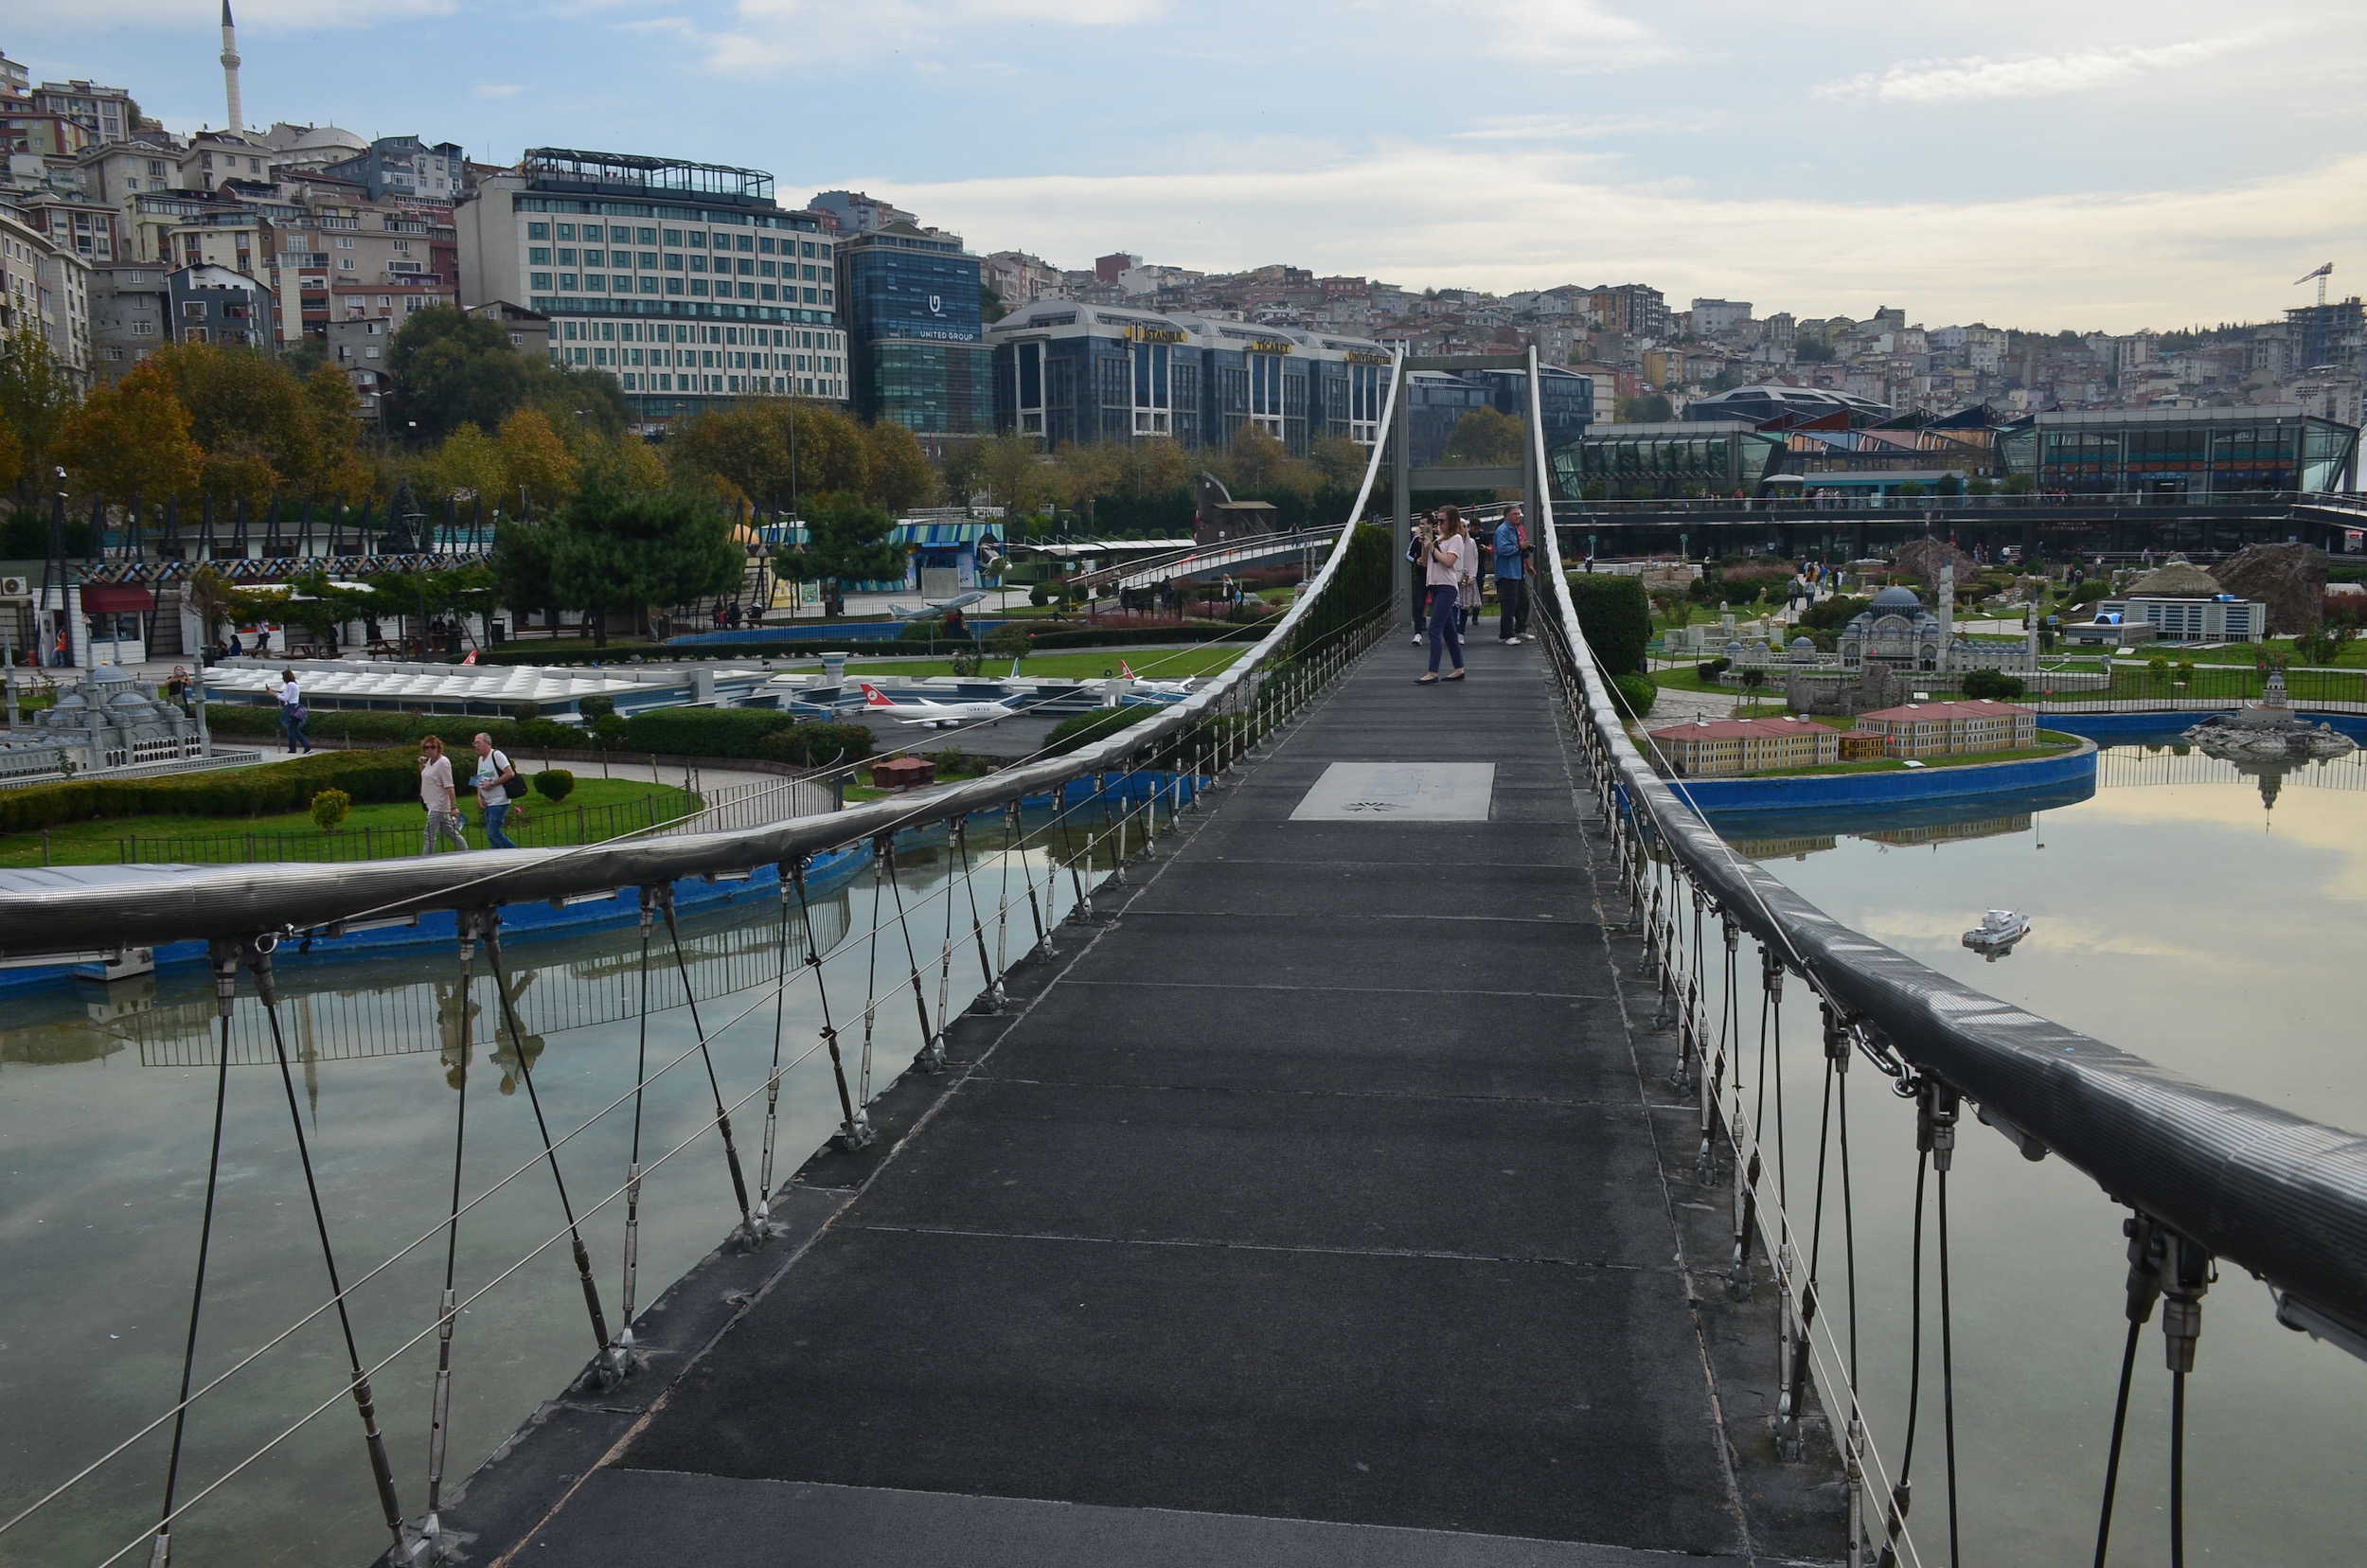 Model of the Bosporus Bridge, 20th century at Miniatürk in Istanbul, Turkey